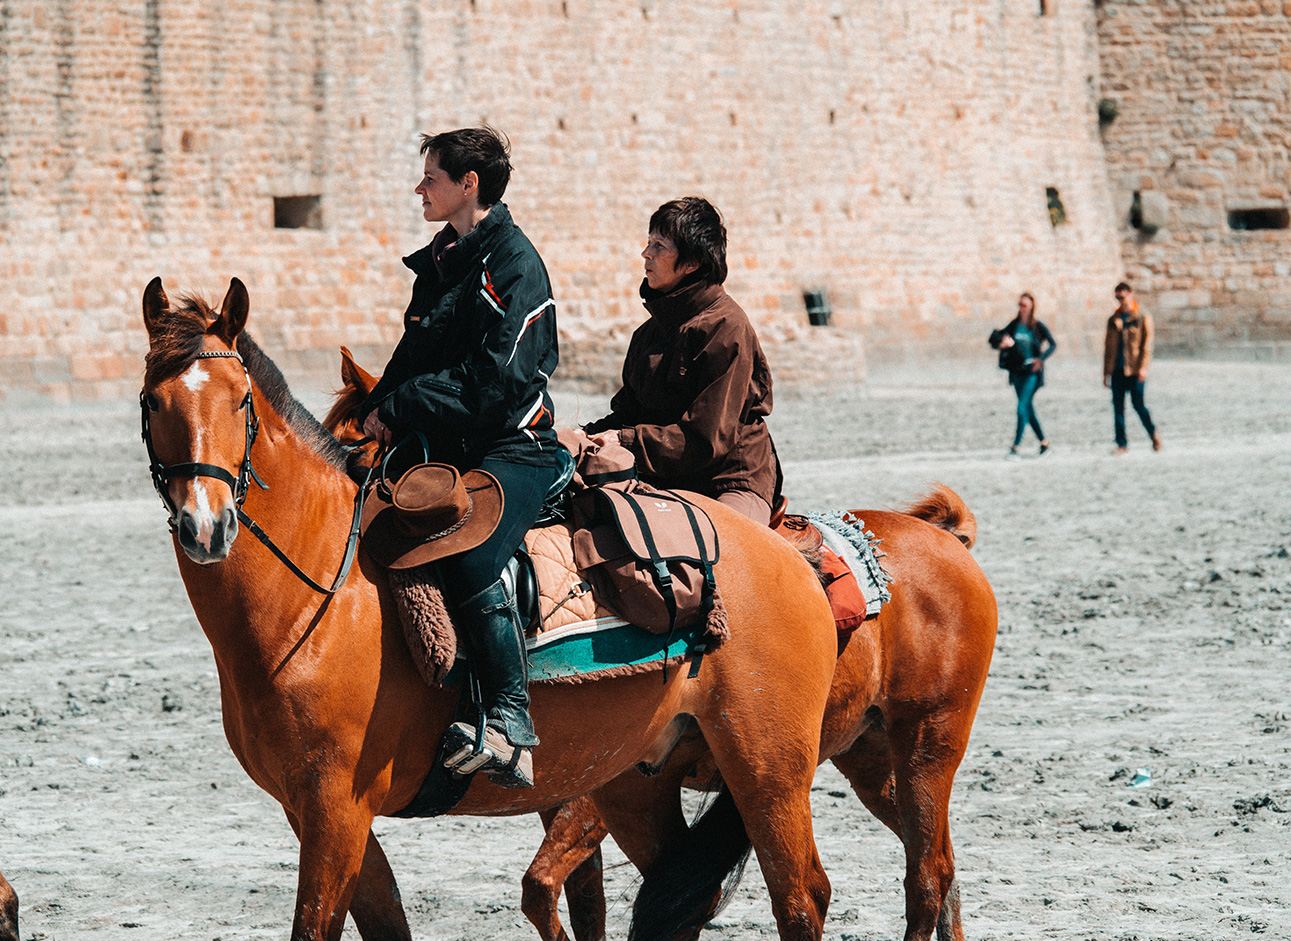 Horse Ride - Enjoy horseback riding adventures in scenic locations